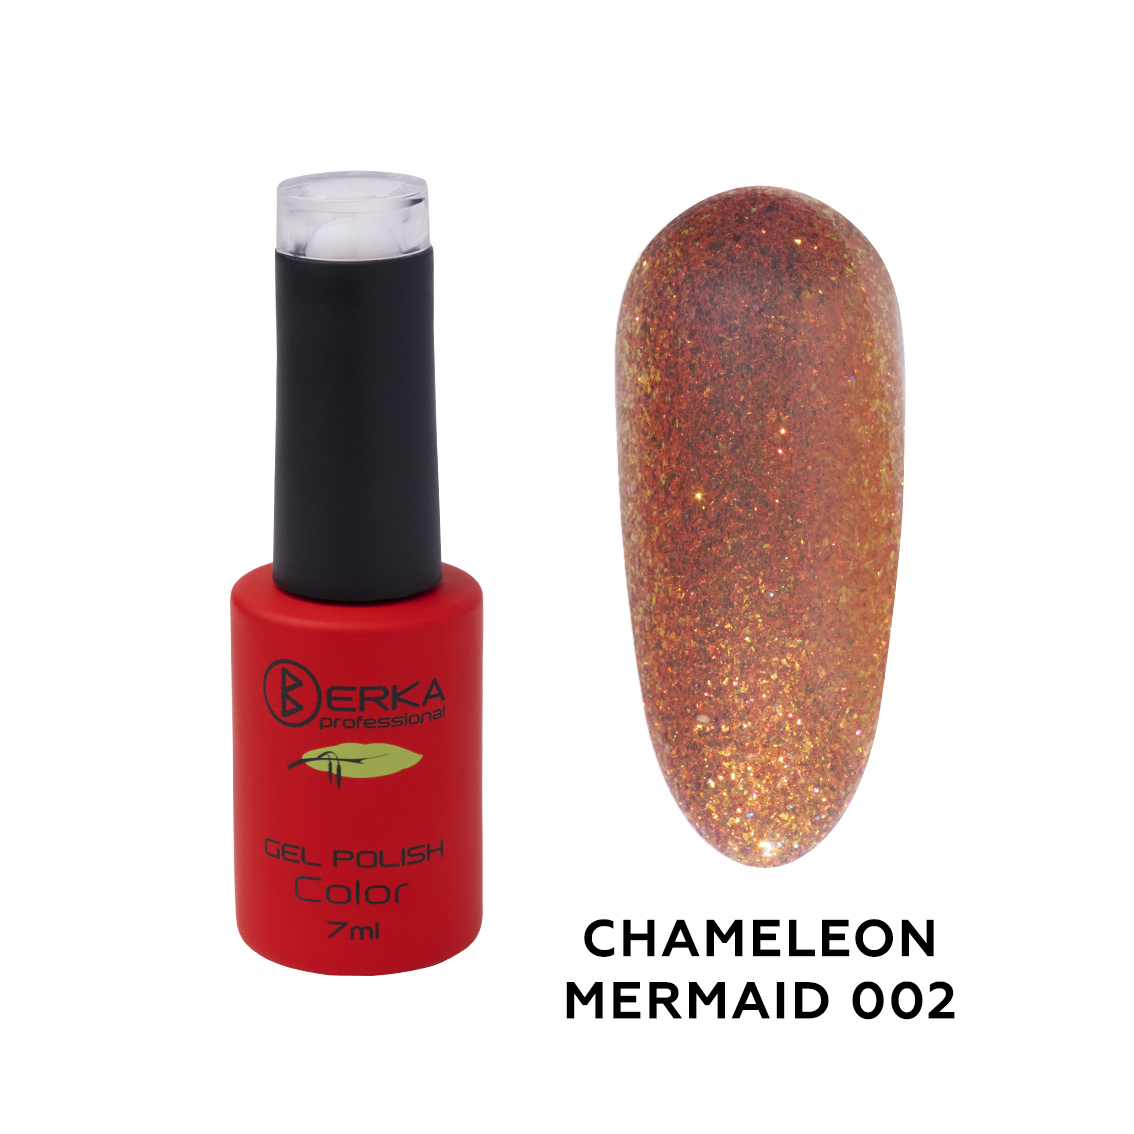 Гель-лак Chameleon mermaid №002 7мл Berka